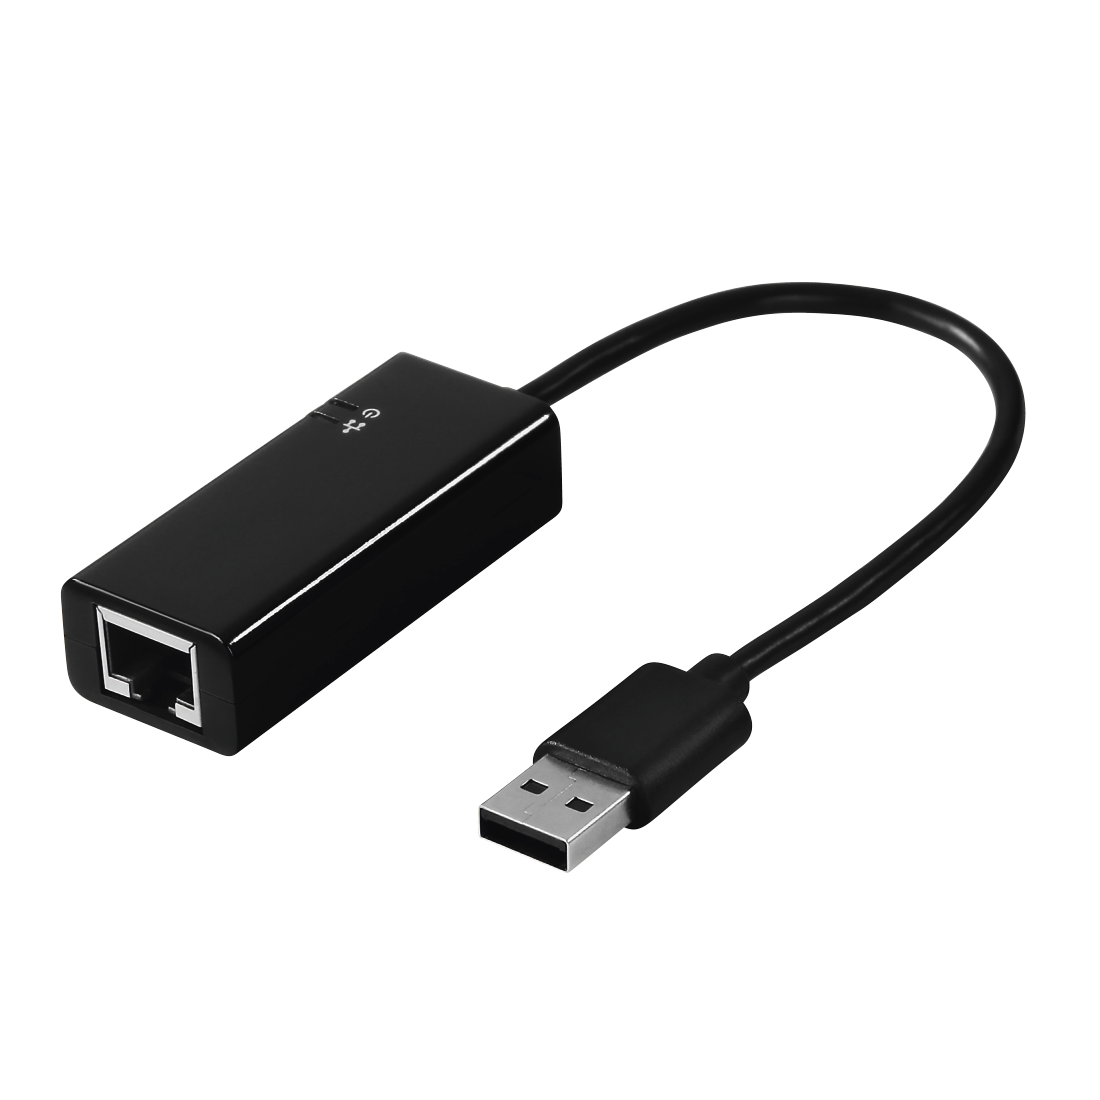 00049244 Hama USB 2.0 Fast Ethernet Adapter, 10/100 Mbps | hama.com